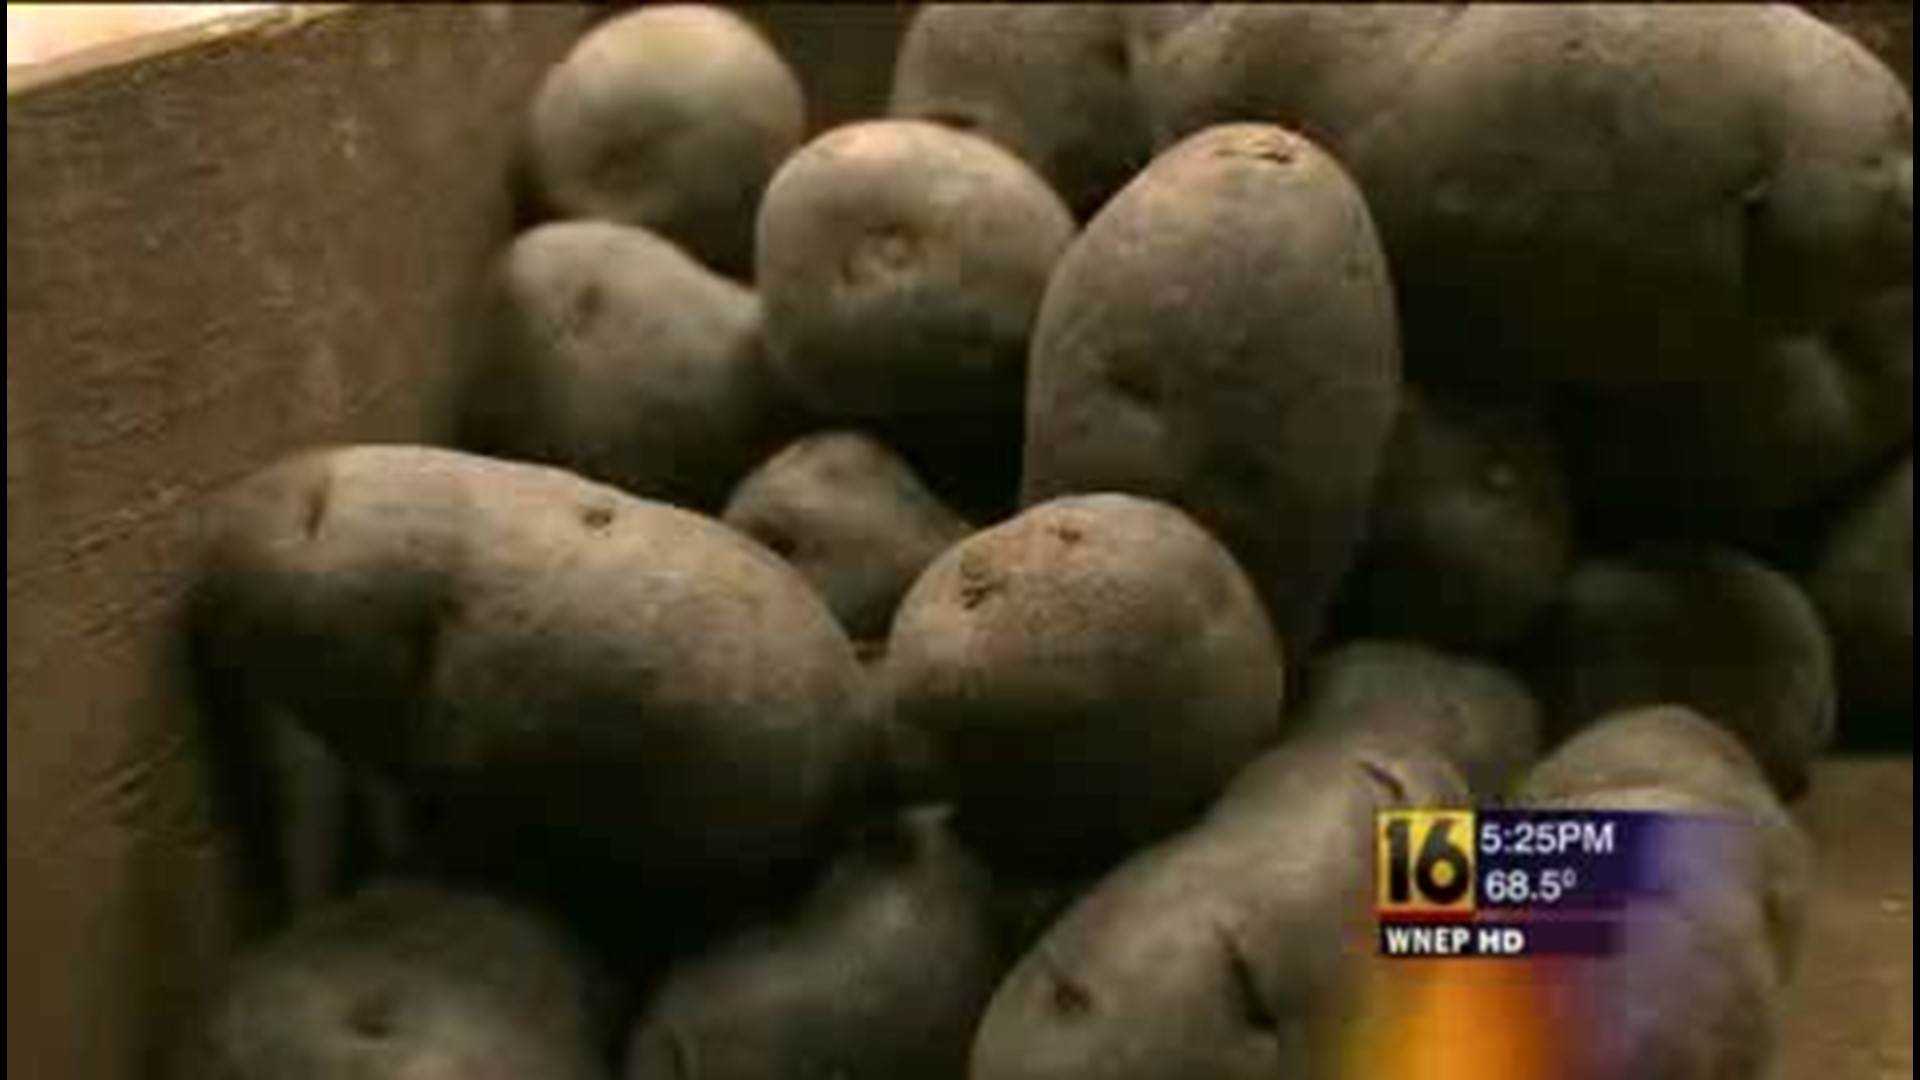 Purple Potatoes and Obesity